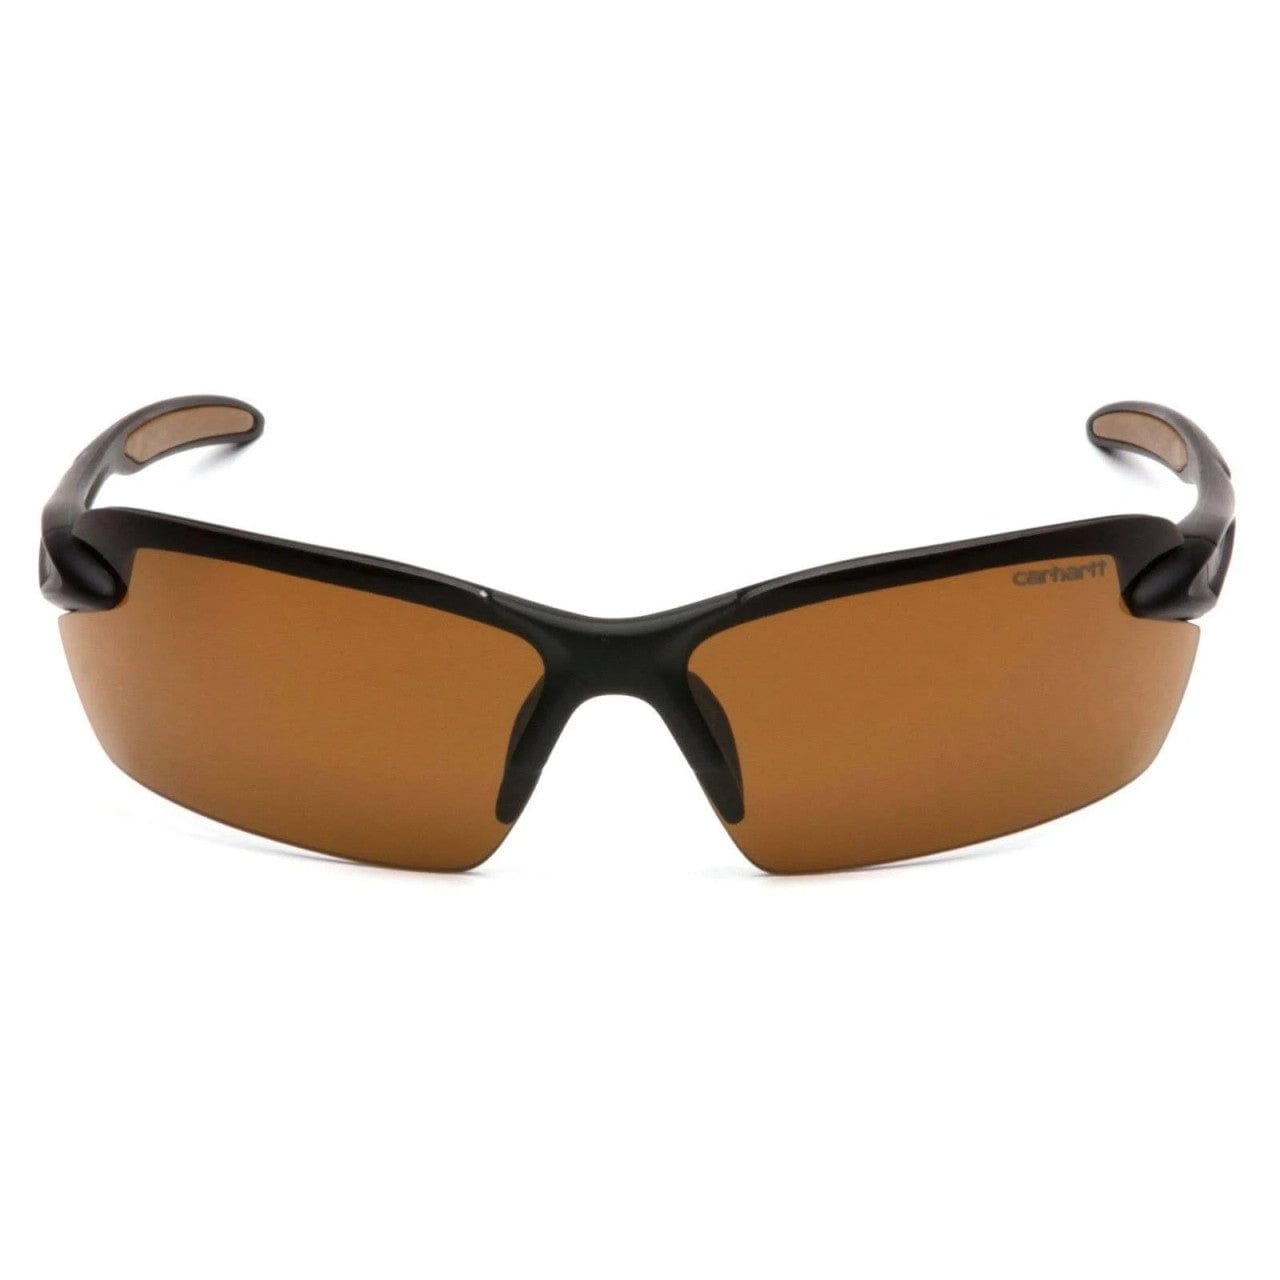 Carhartt Spokane Safety Glasses with Black Frame and Sandstone Bronze Lens CHB318D Front